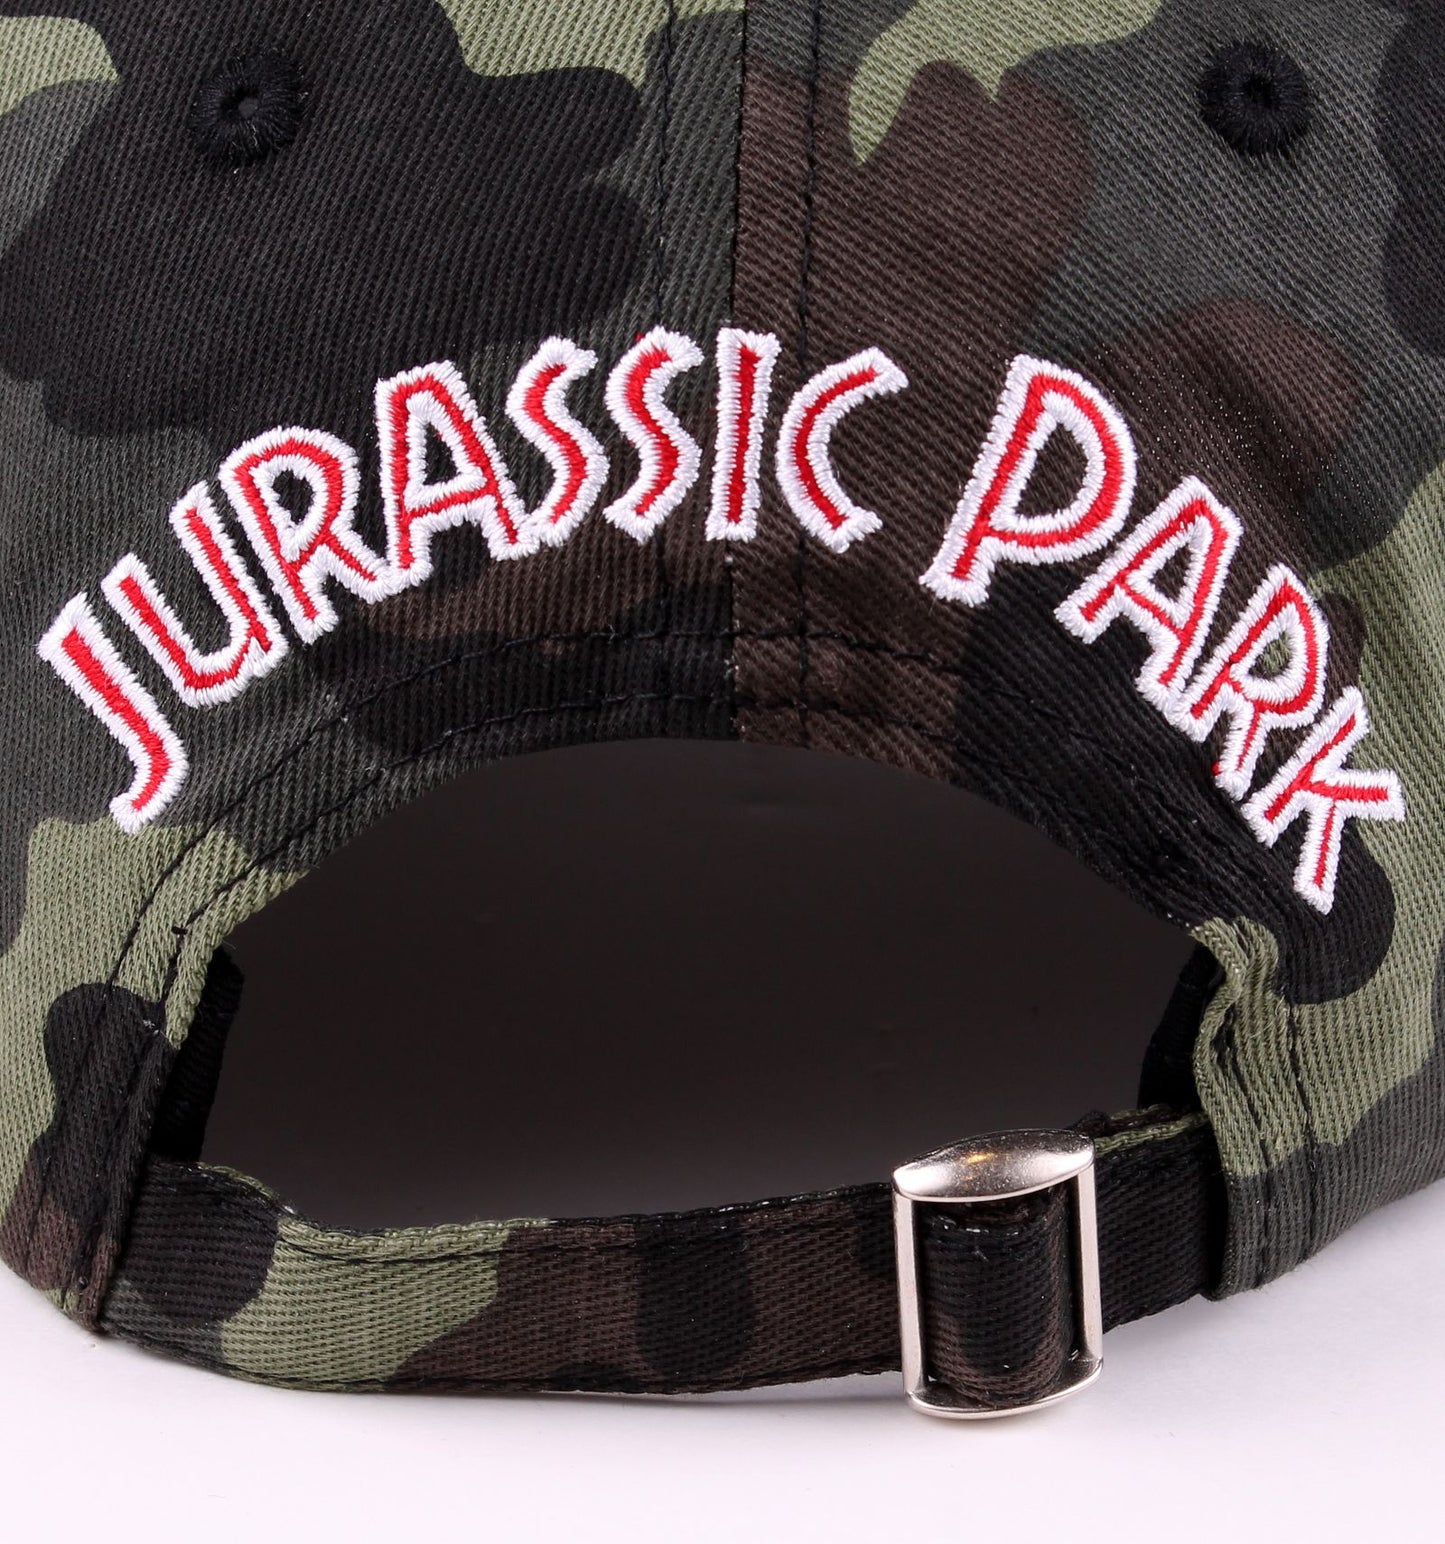 Jurassic Park Cap - Camouflage Logo